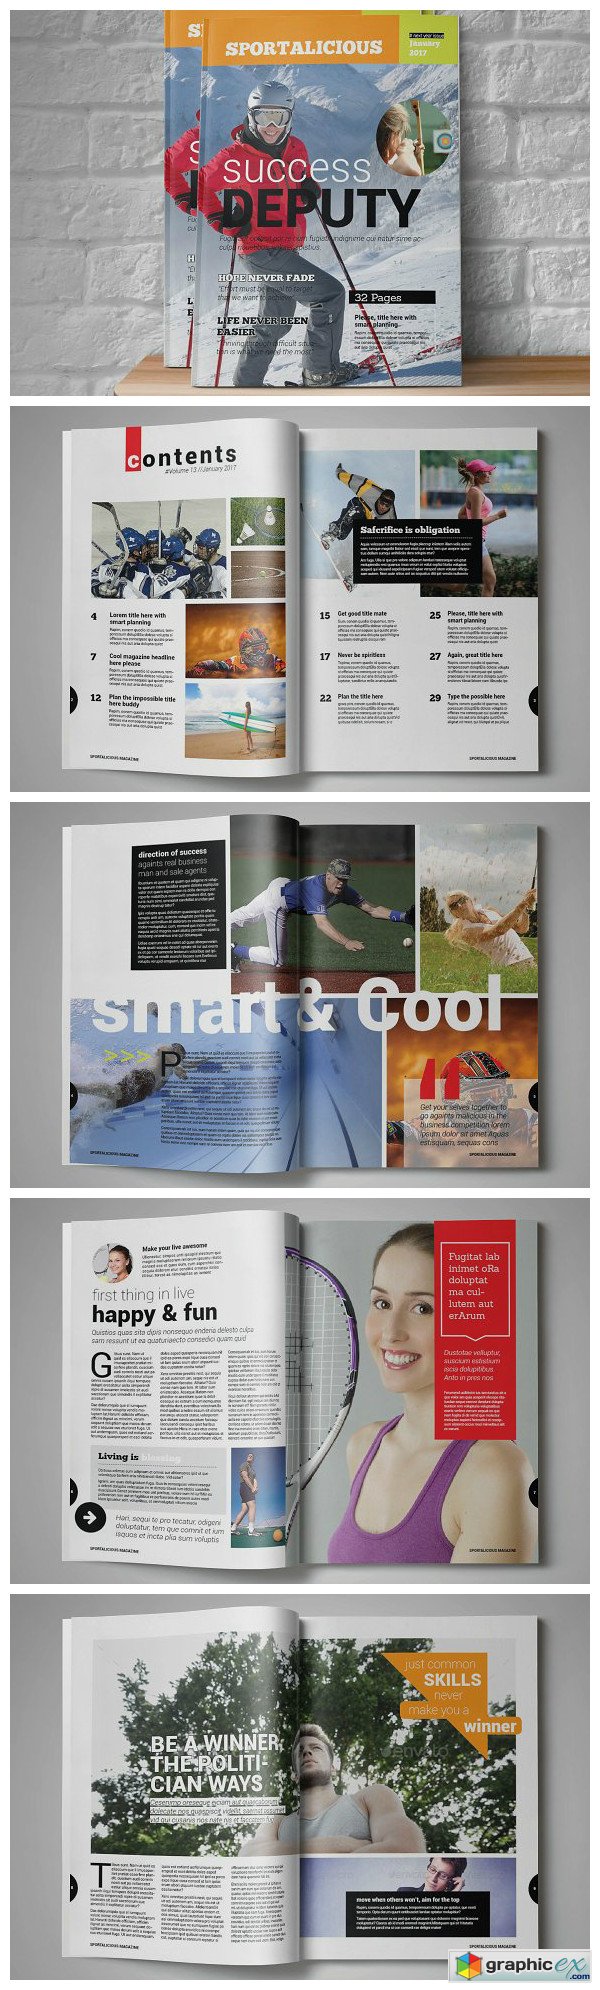 Sportalicious Magazine